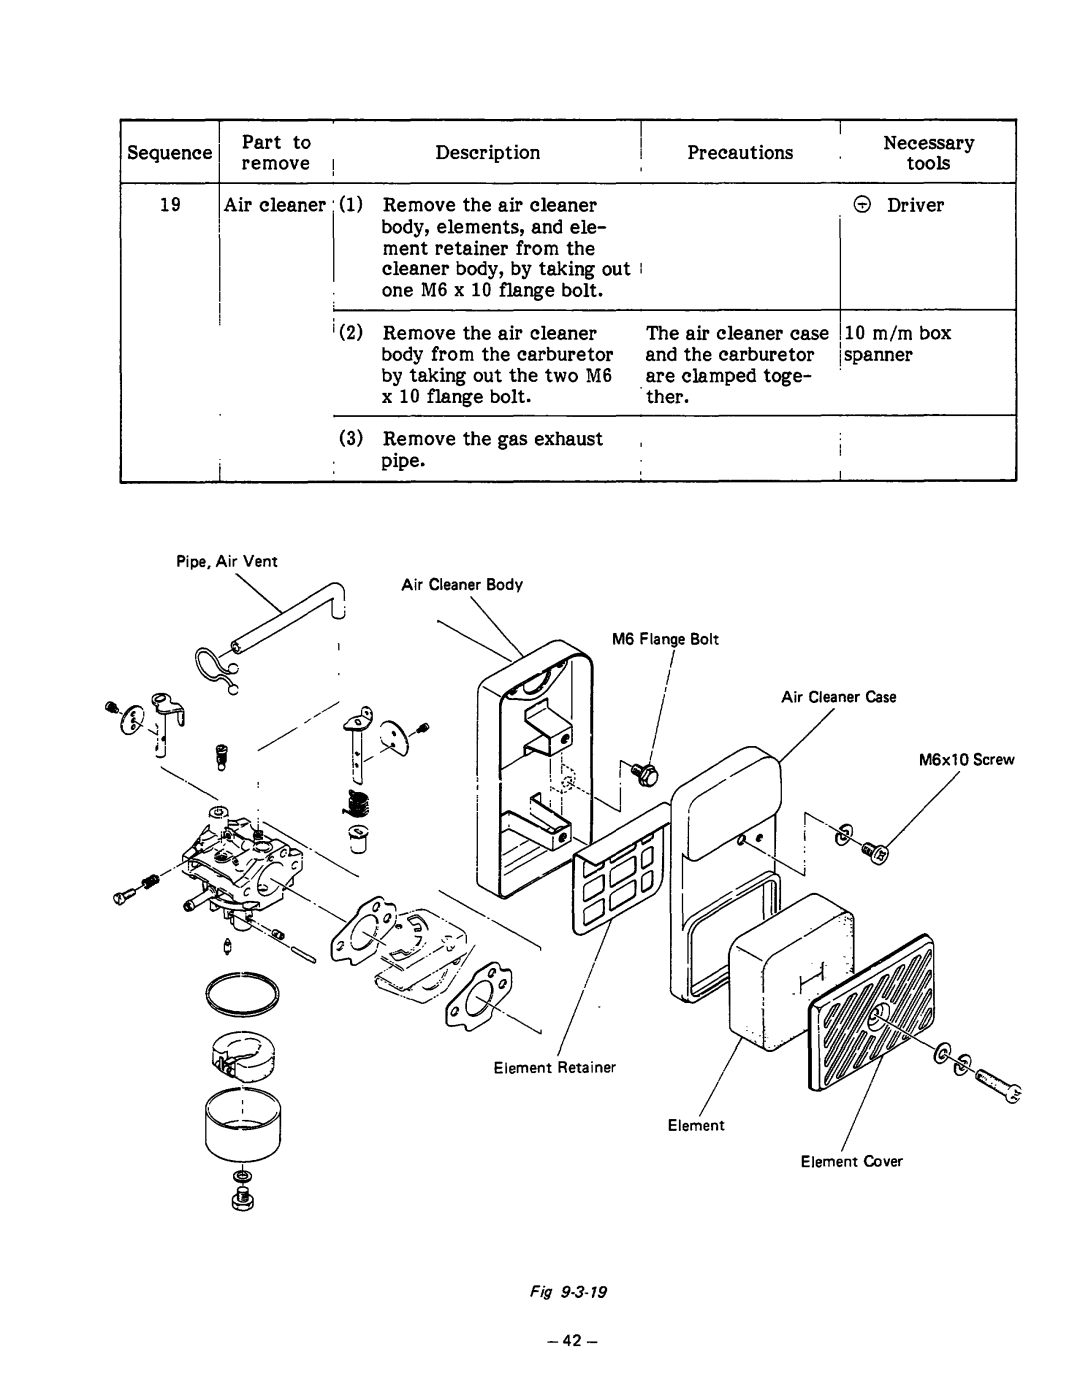 Subaru Robin Power Products R1200 Description I, Necessary I Precautions . tools @ Driver I, 3Remove the gas exhaust Ipipe 